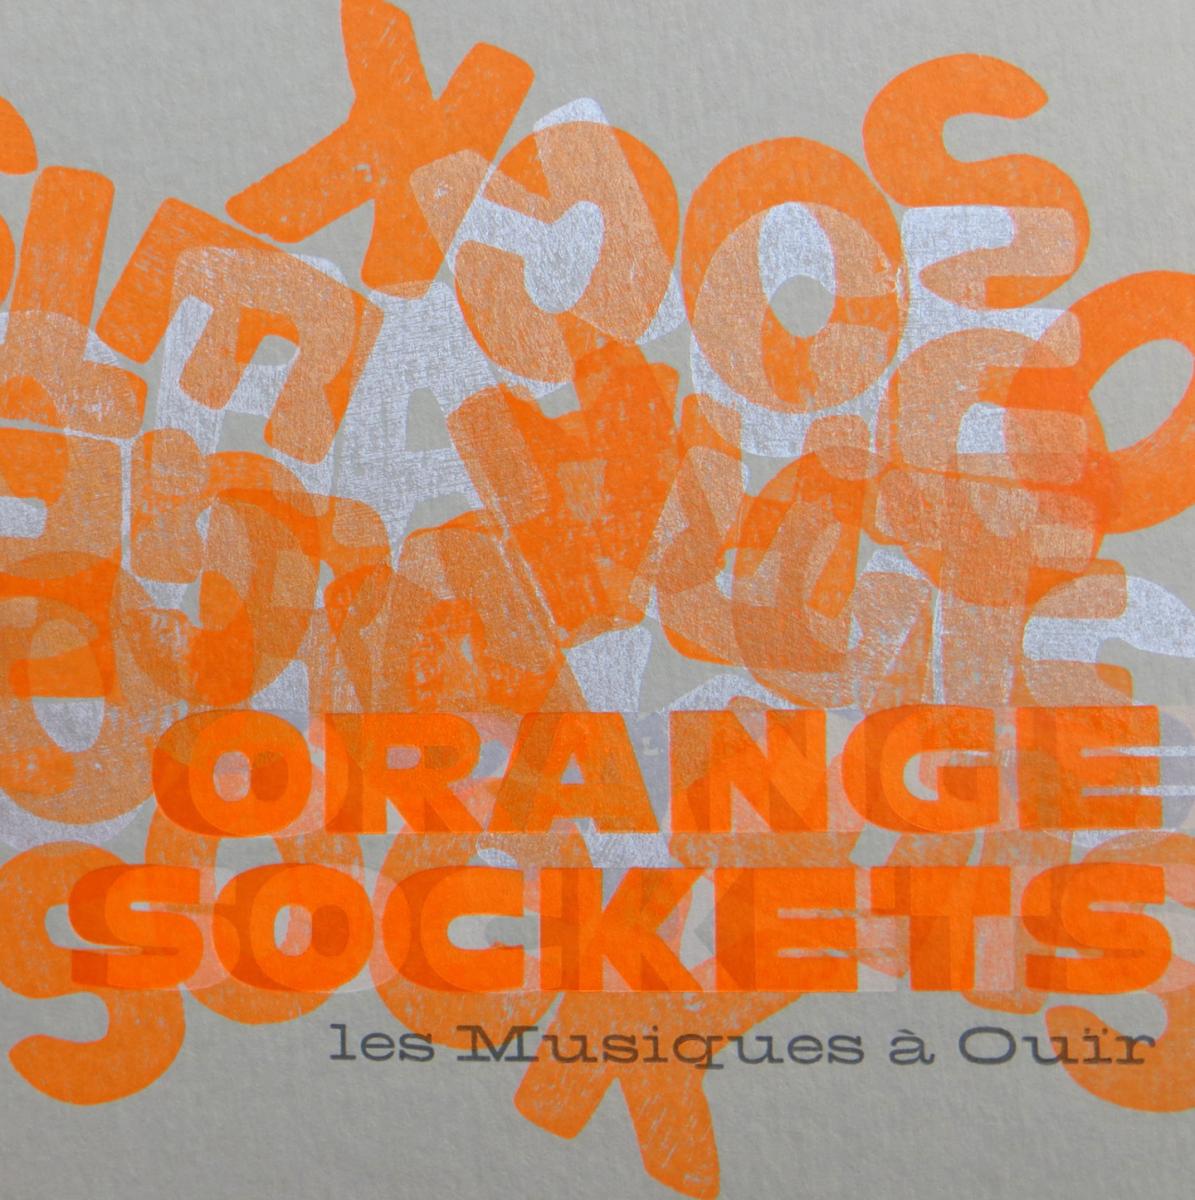 Orange Sockets Artwork